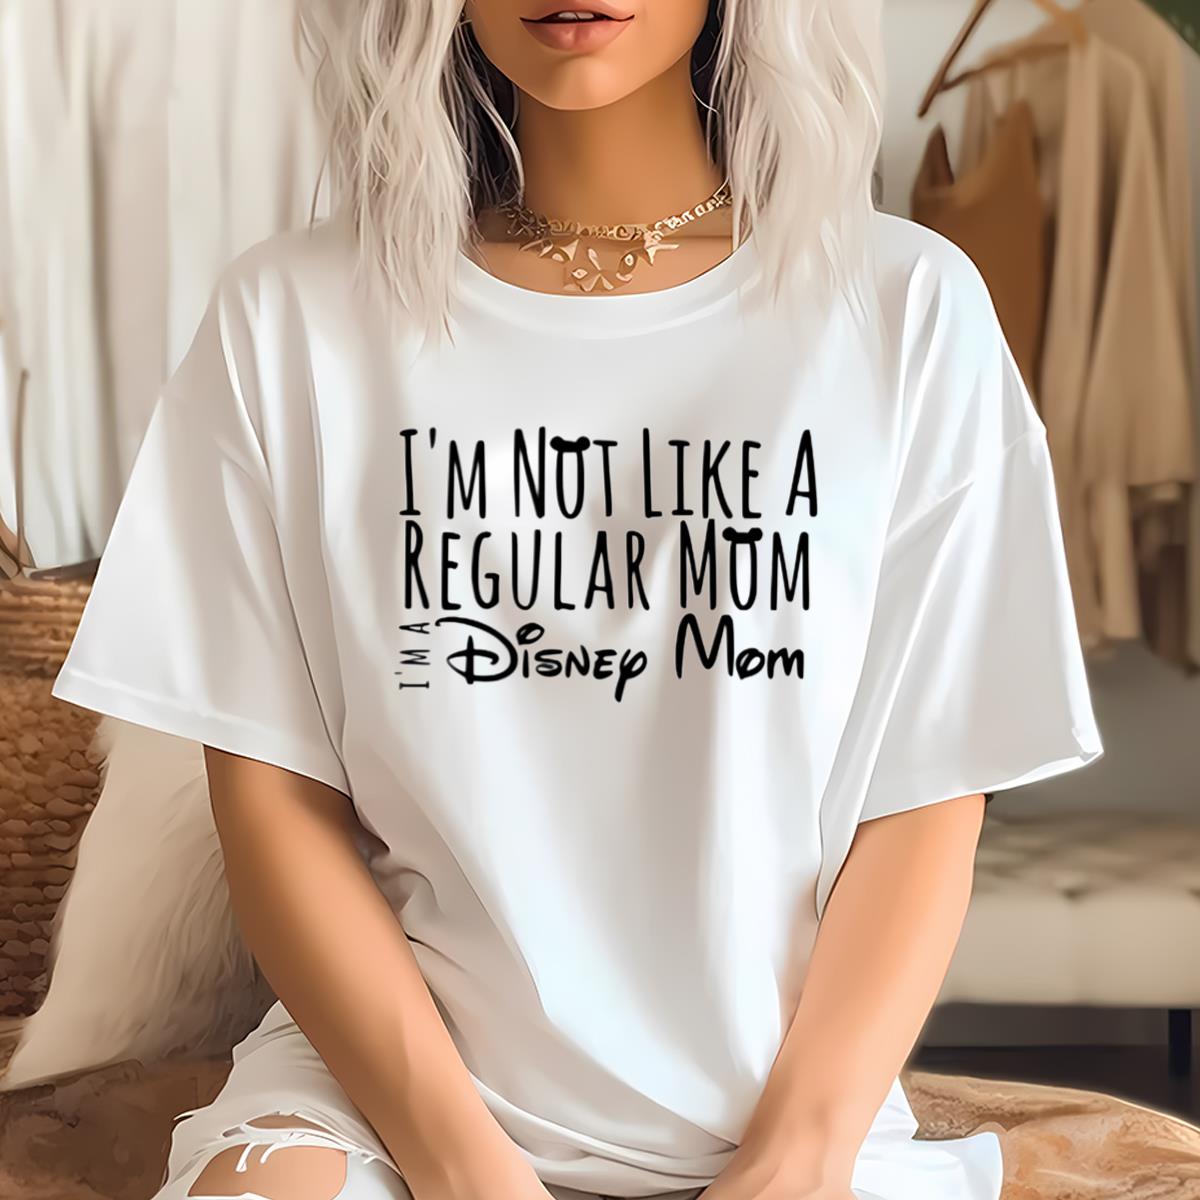 Disney Mom Shirt, I’m Not Like A Regular Mom Shirt